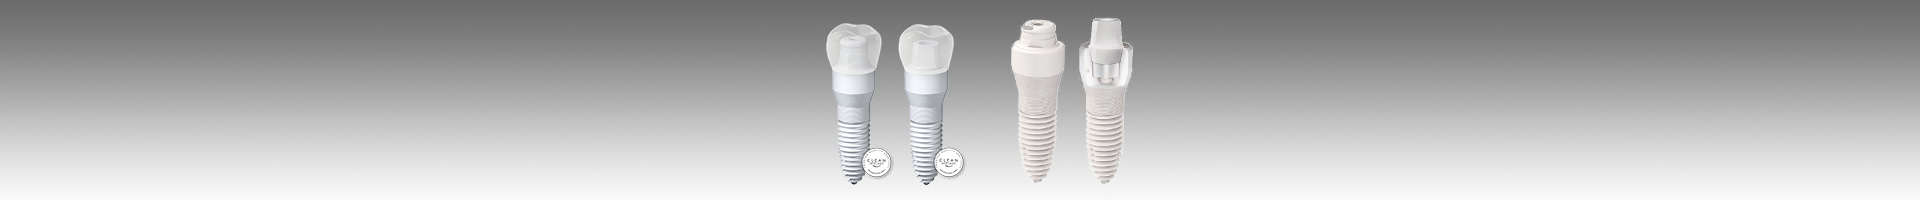 Ceramic Dental Implants Glen Allen VA